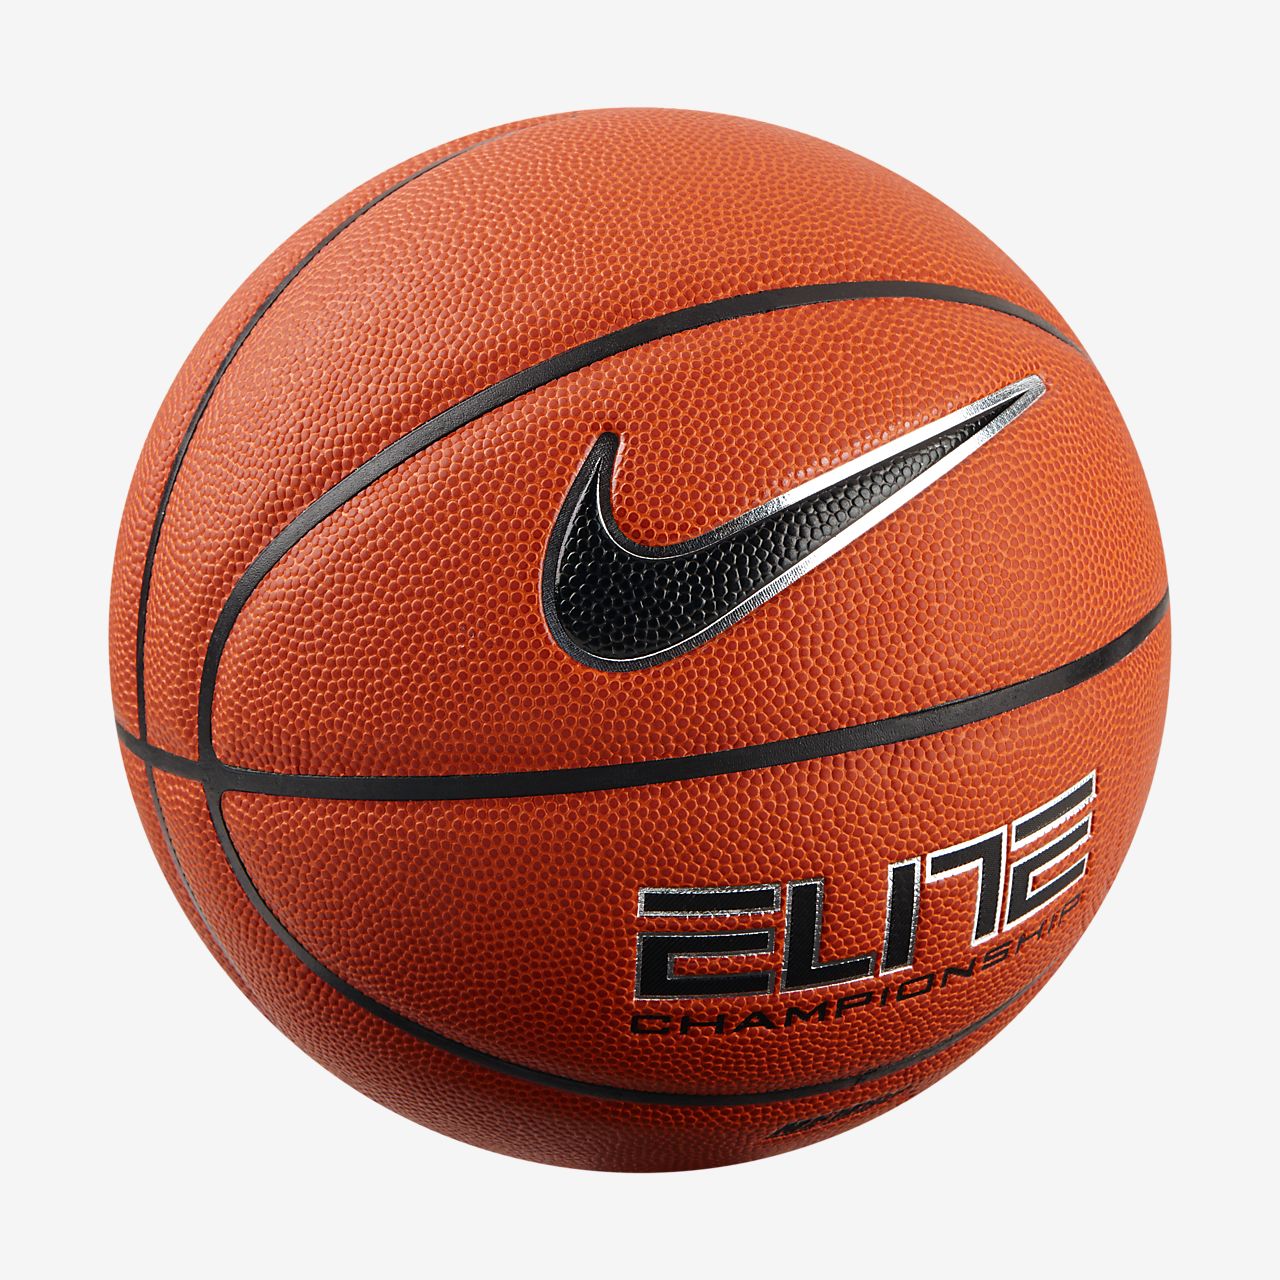 elite-championship-8-panel-basketball-size-6-89Tq4zVy.jpg